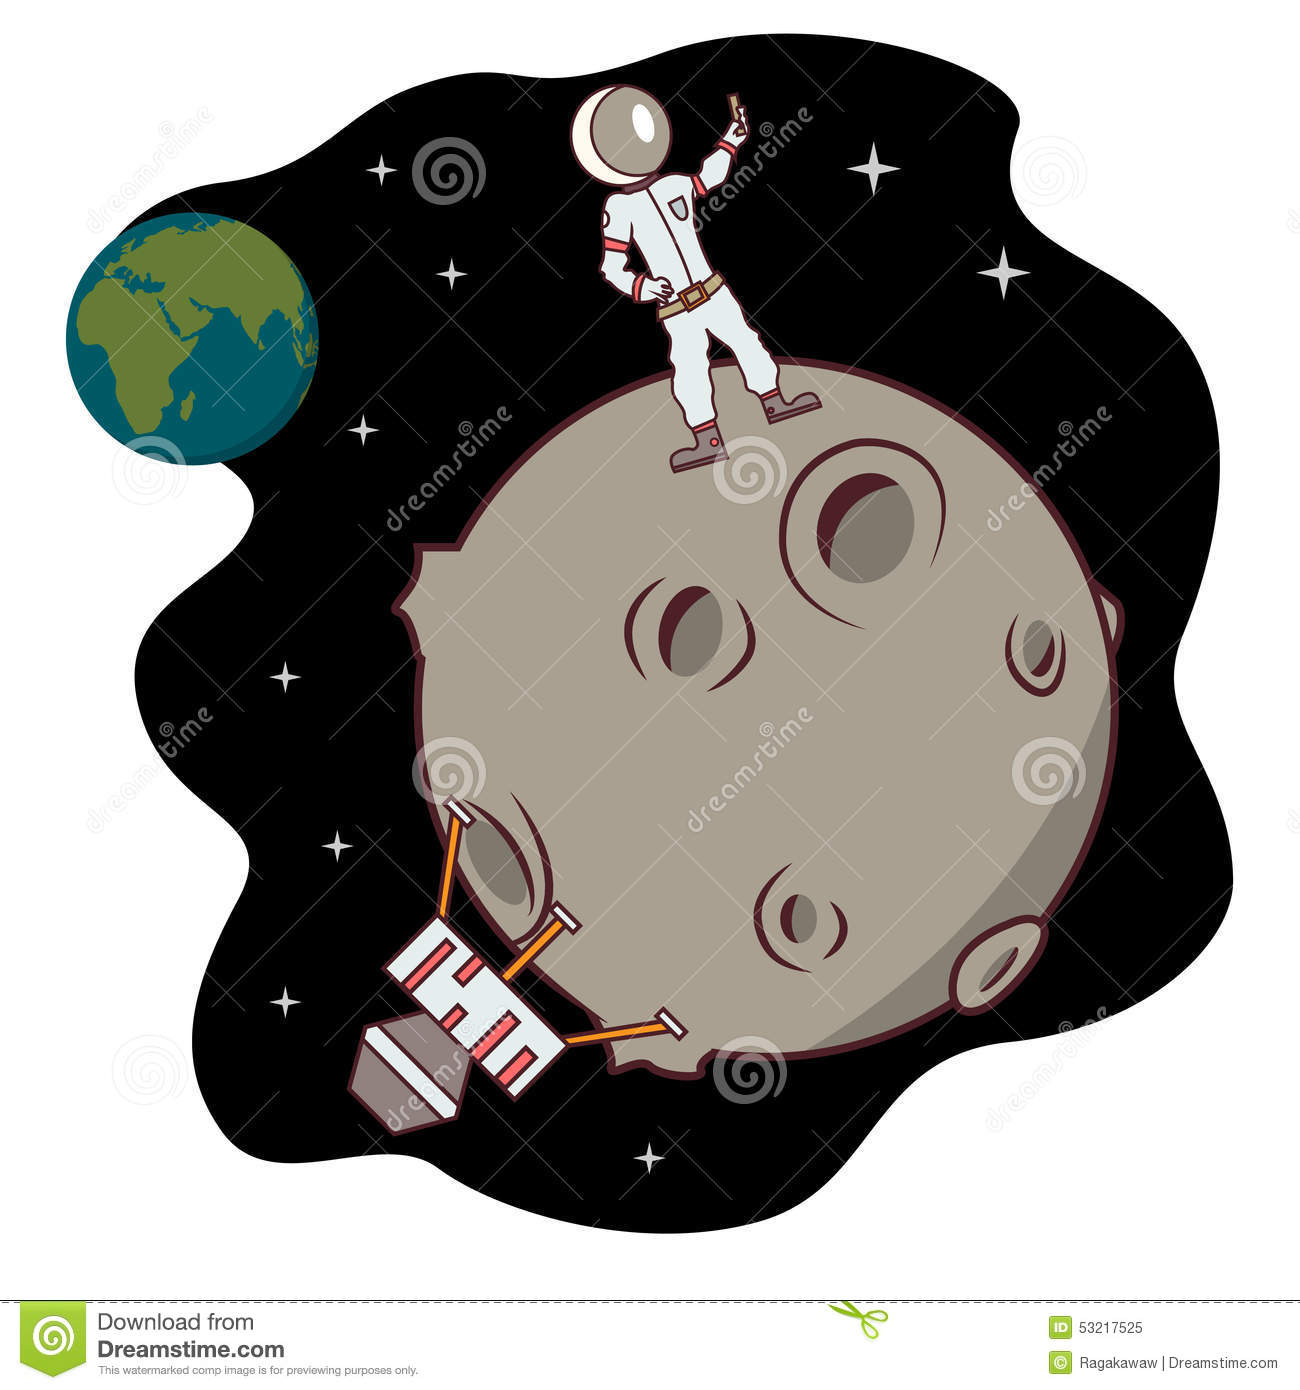 moon landing clipart - photo #10